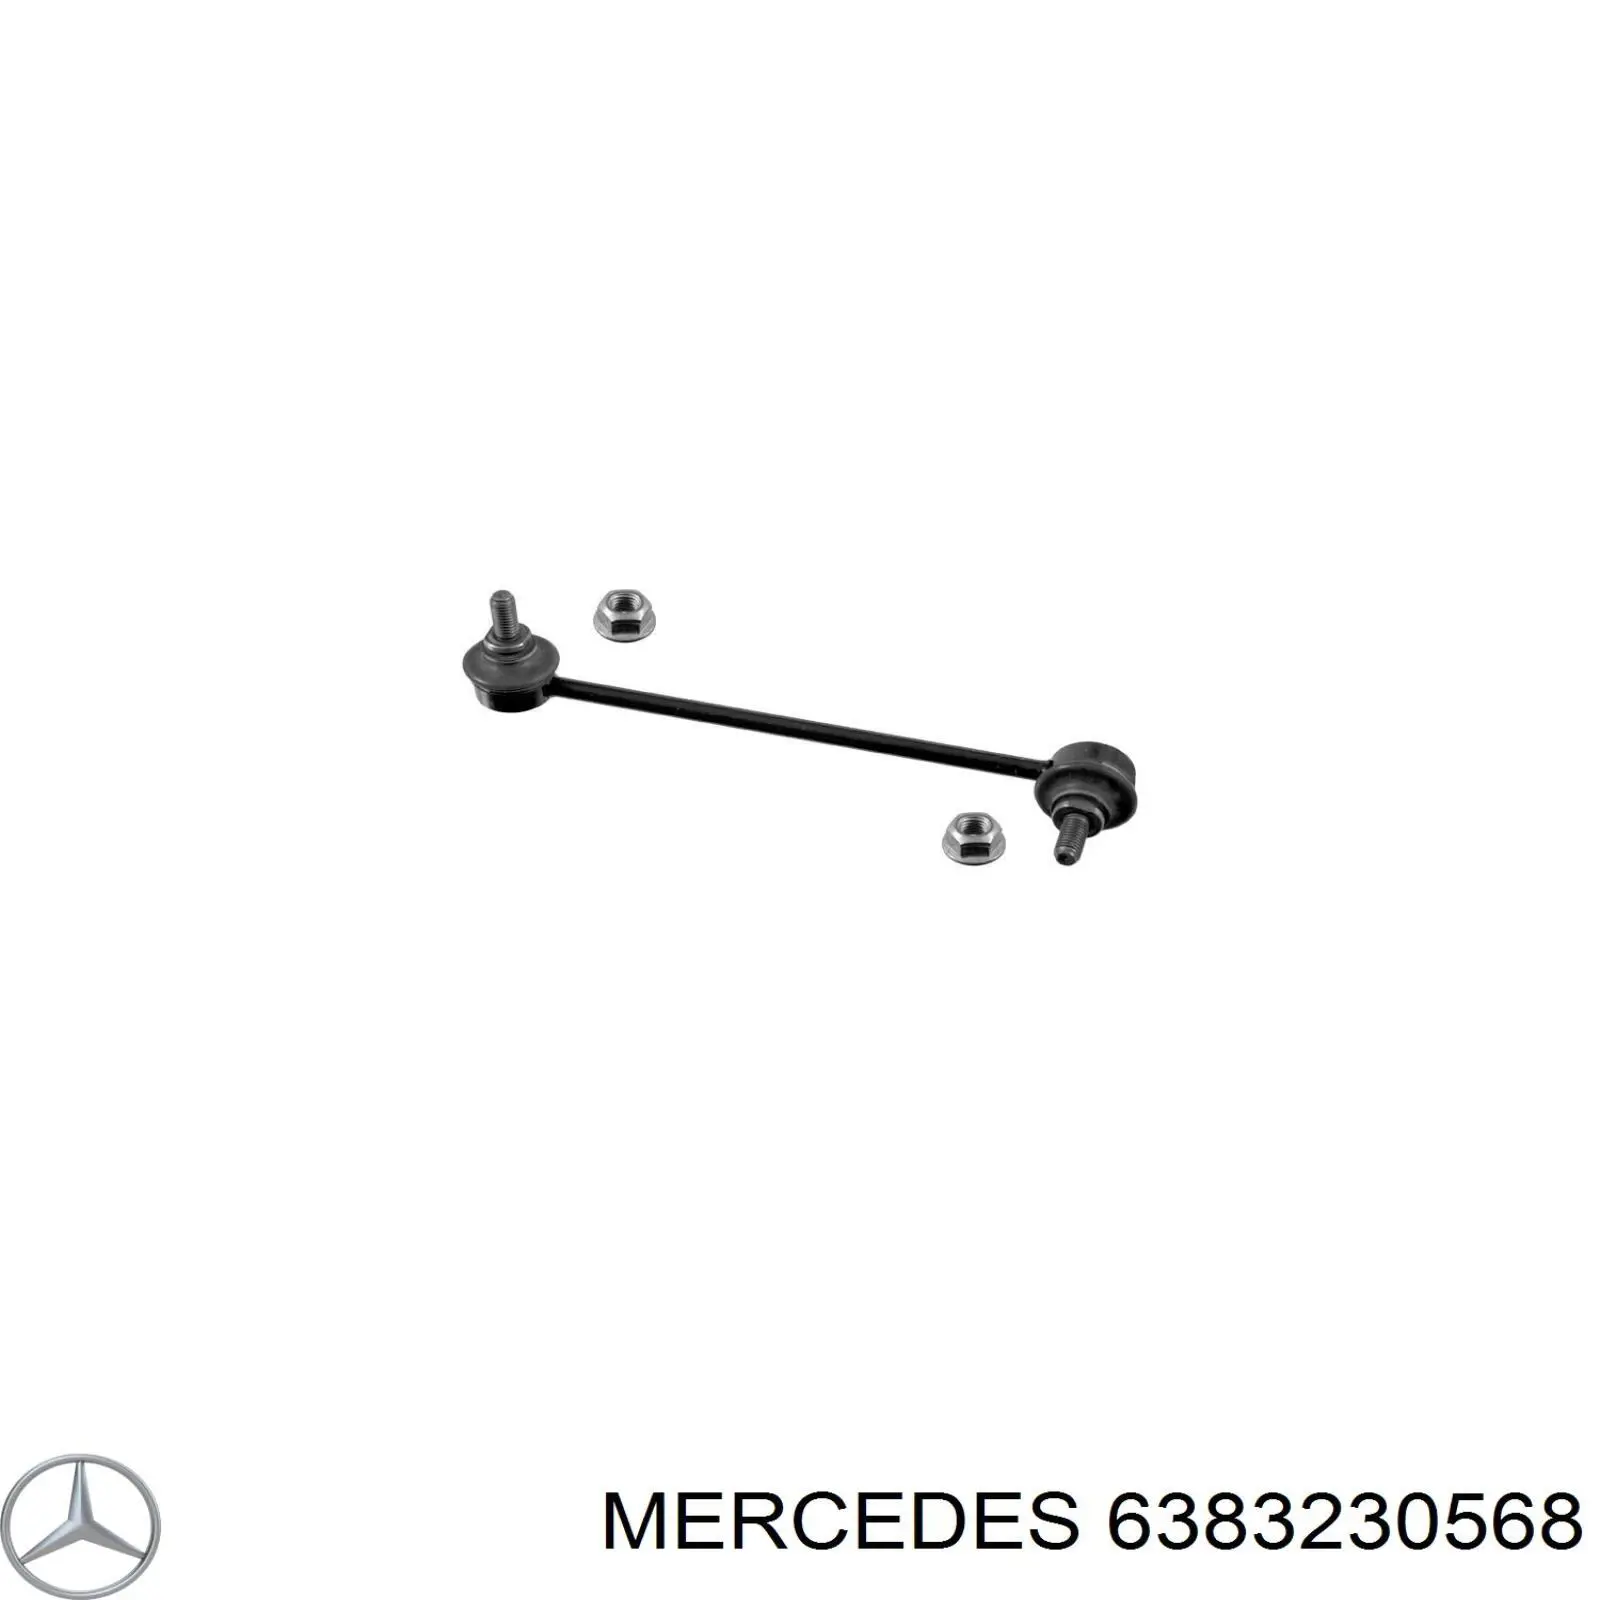 6383230568 Mercedes barra estabilizadora delantera derecha